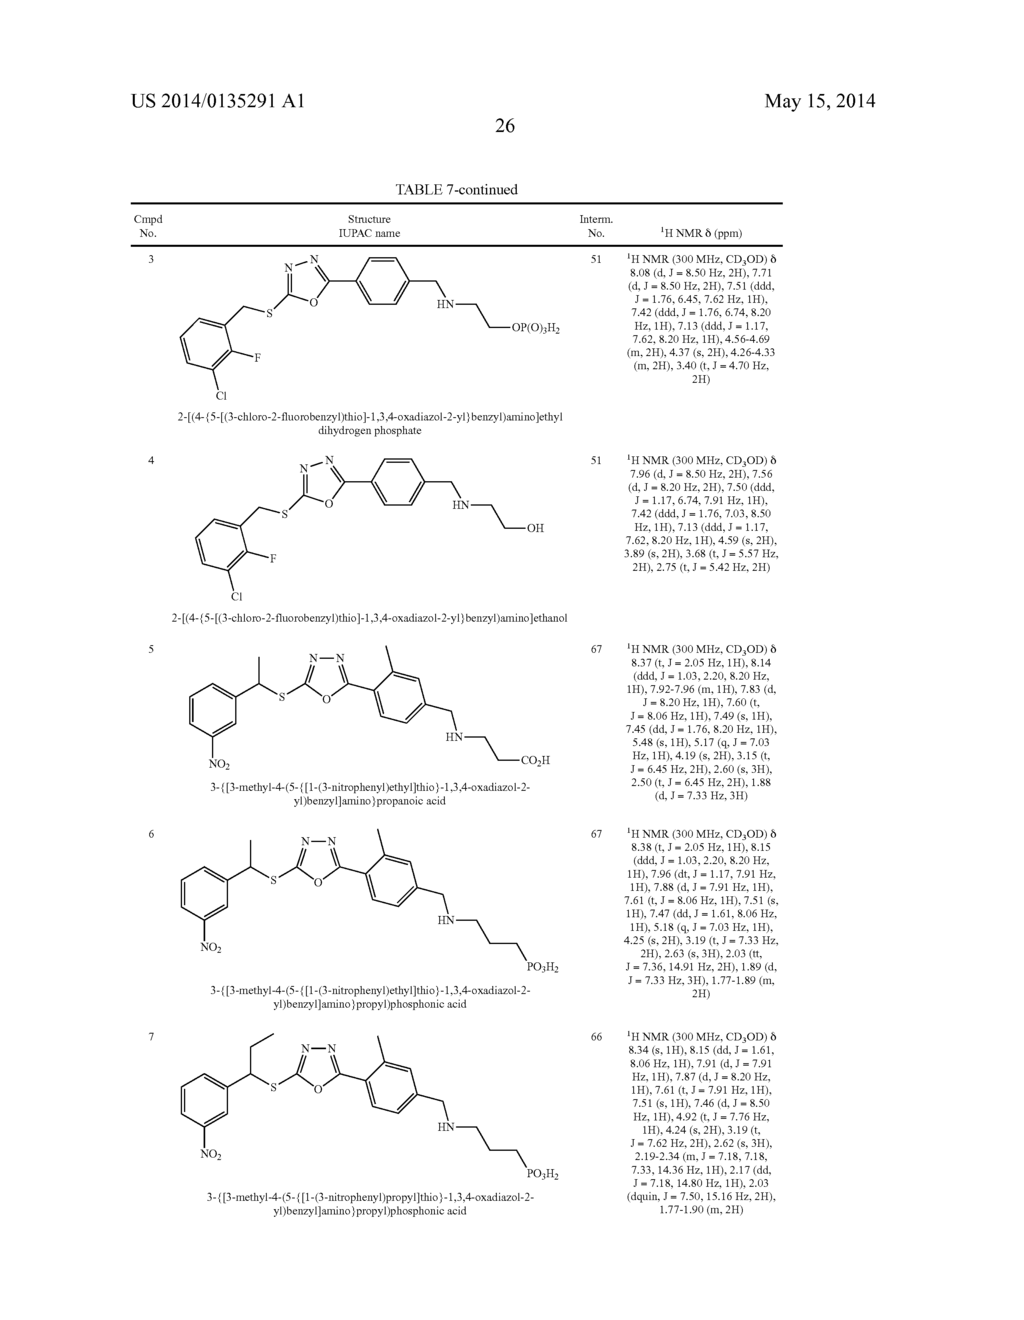 2-THIO-1,3,4-OXADIAZOLES DERIVATIVES AS SPHINGOSINE-1 PHOSPHATE RECEPTORS     MODULATORS - diagram, schematic, and image 27